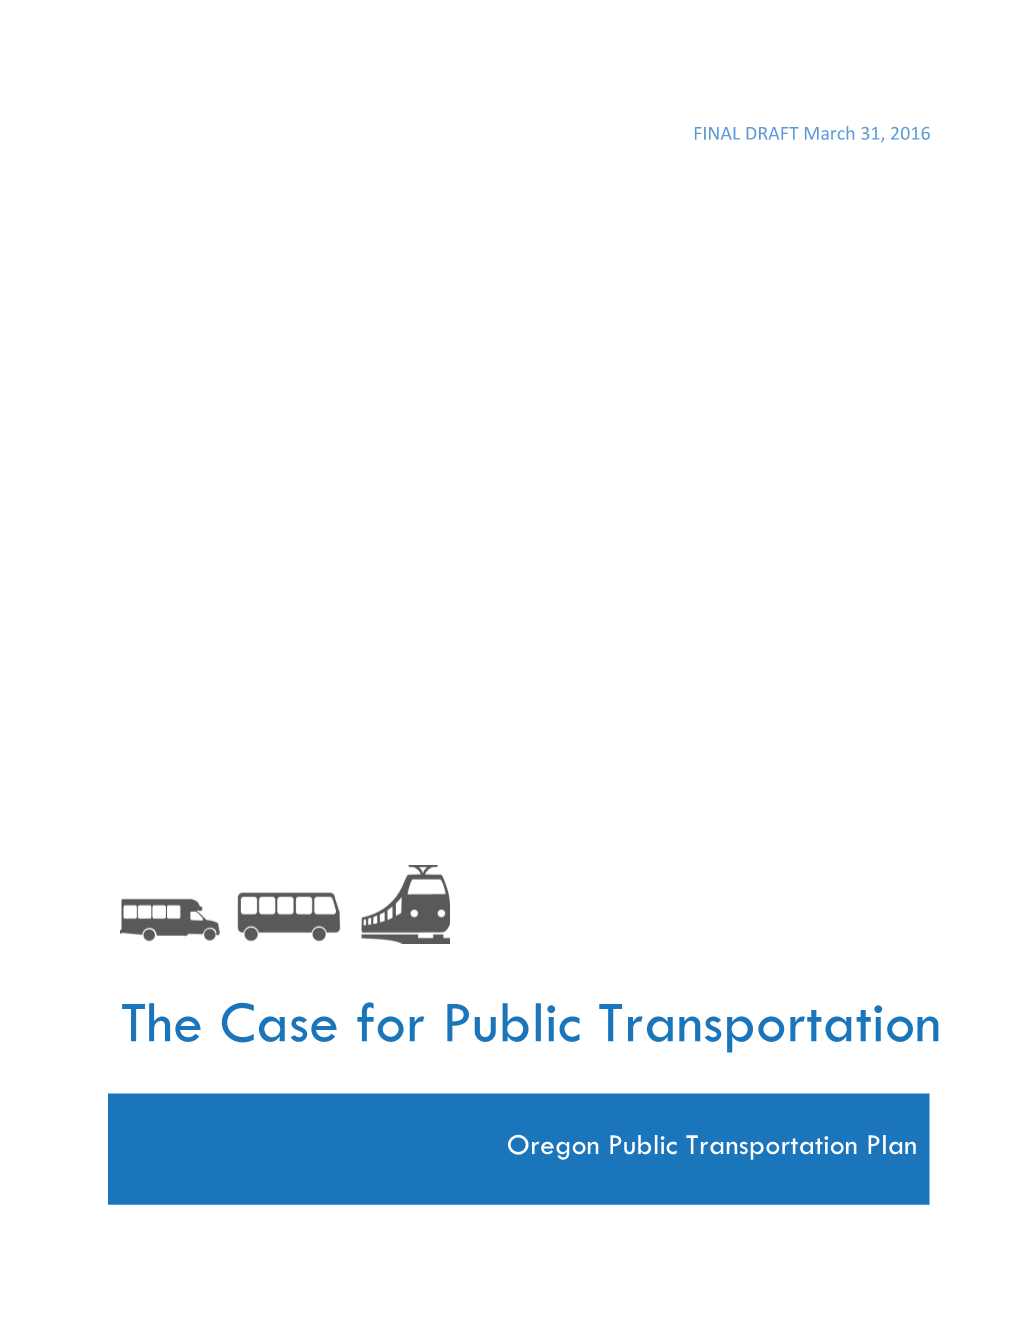 The Case for Public Transportation